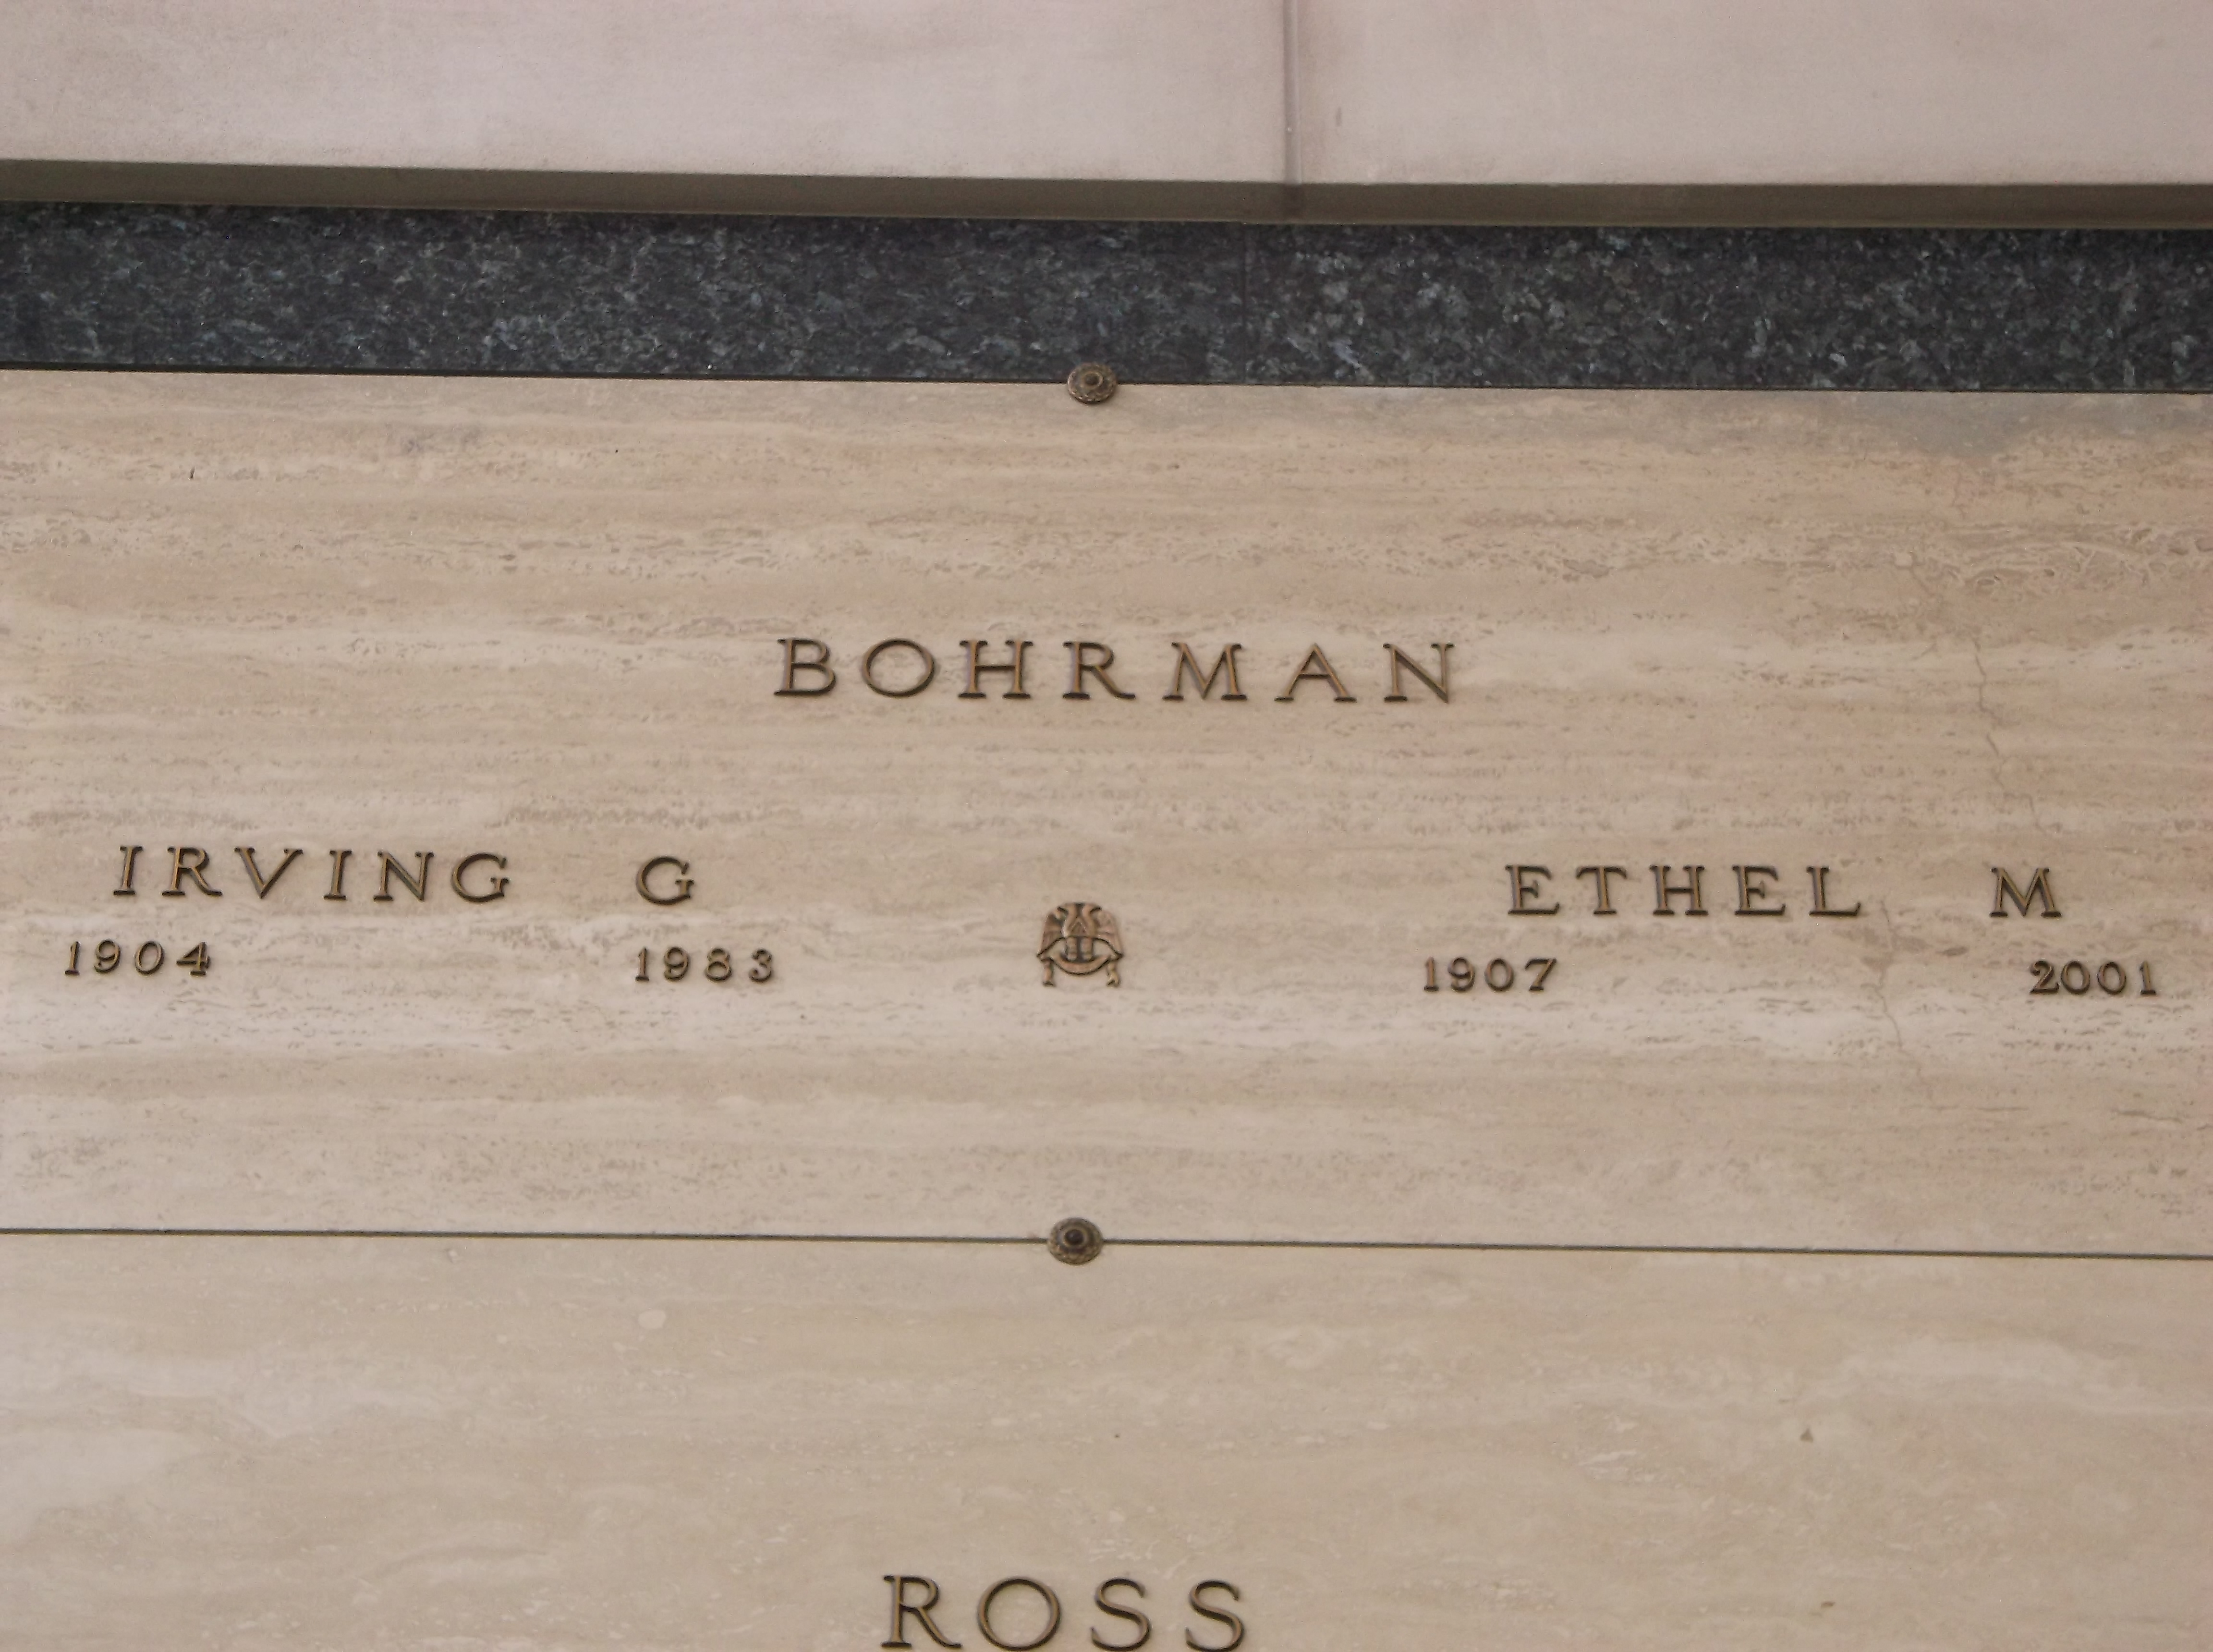 Ethel M Bohrman